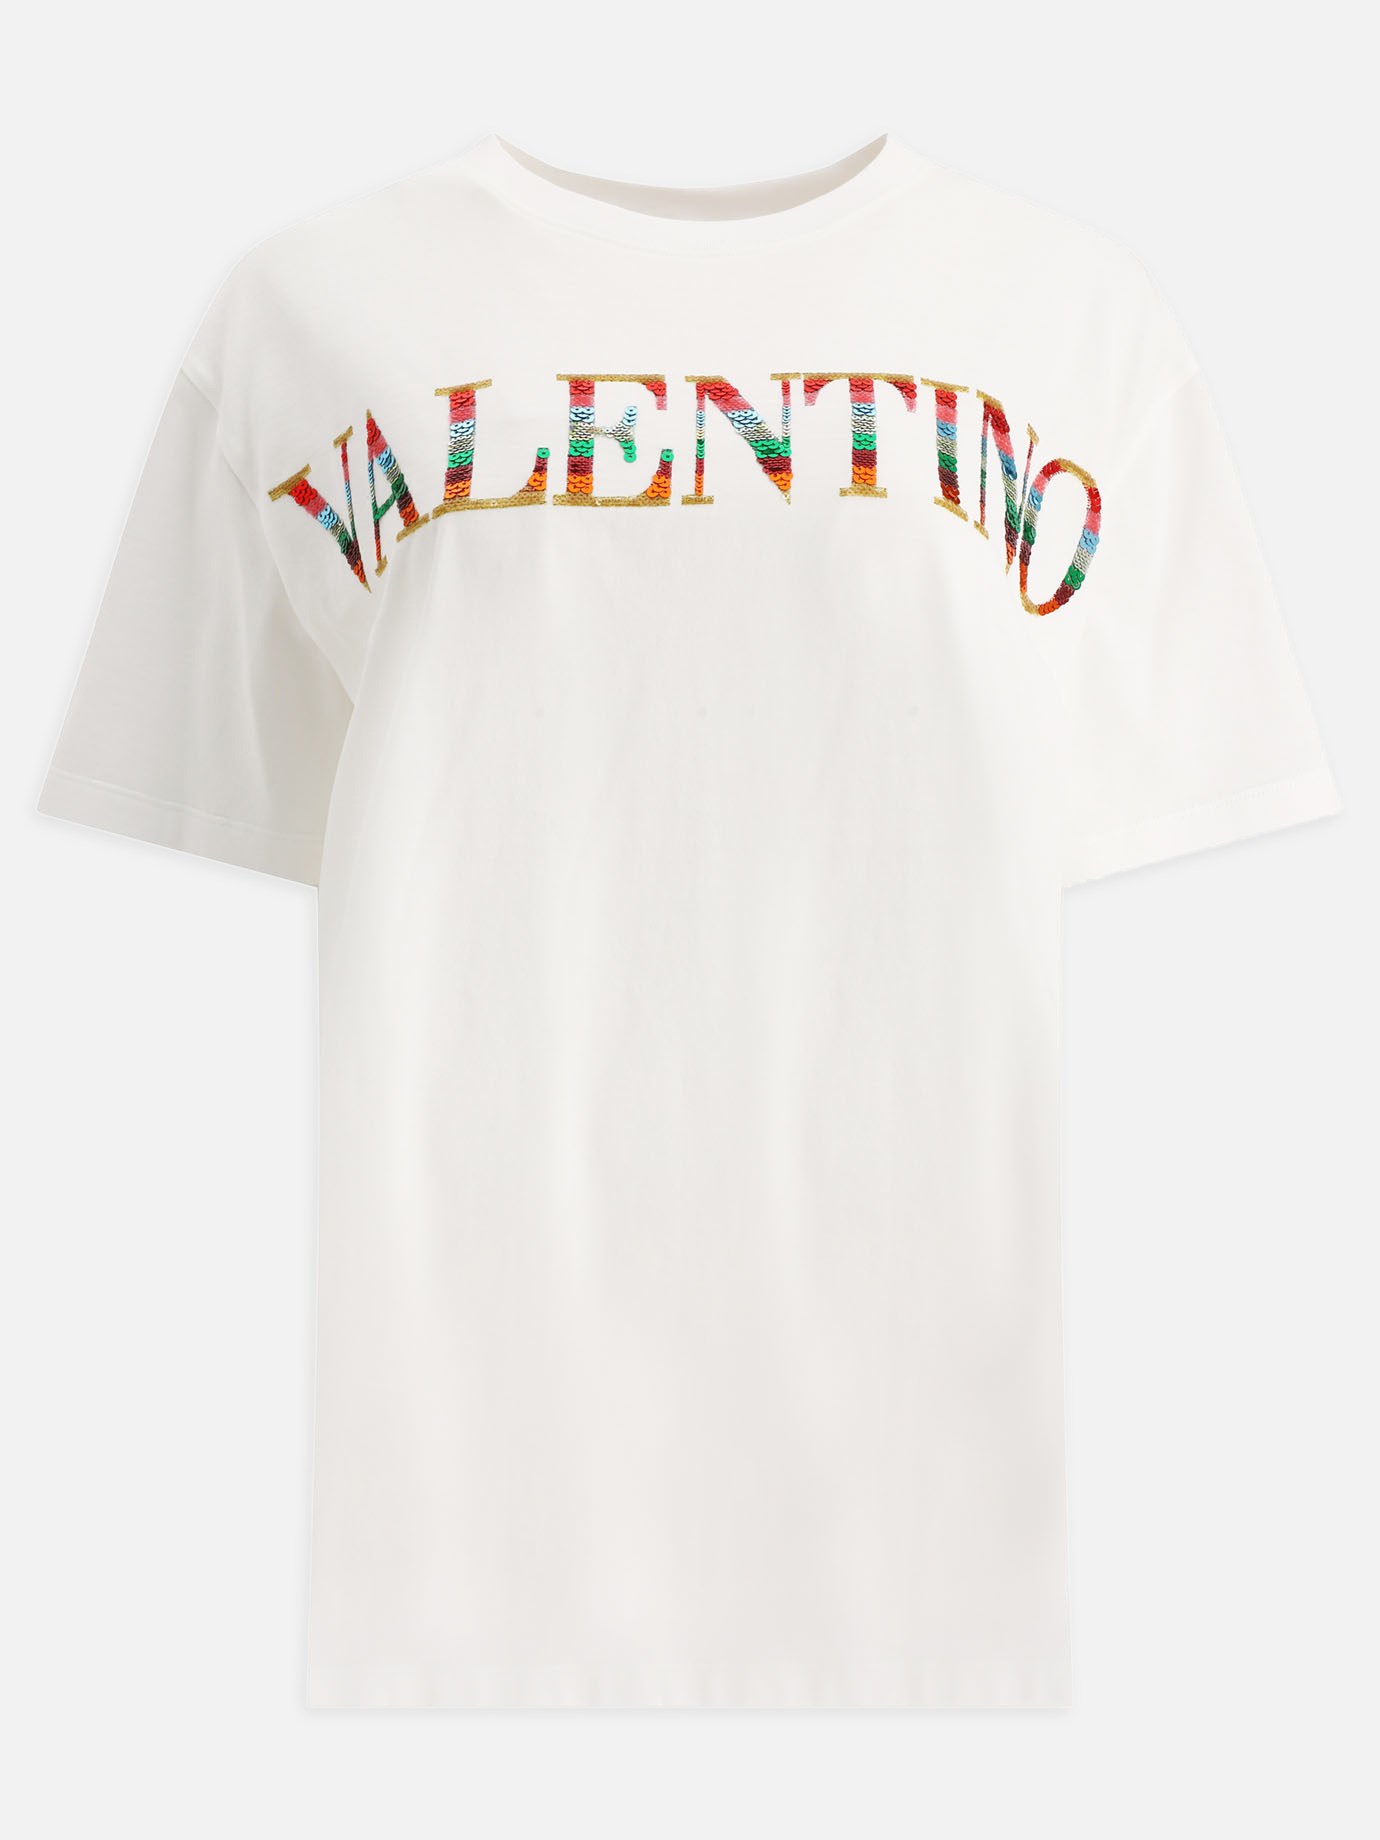  Sequin Valentino  t-shirtby Valentino - 3